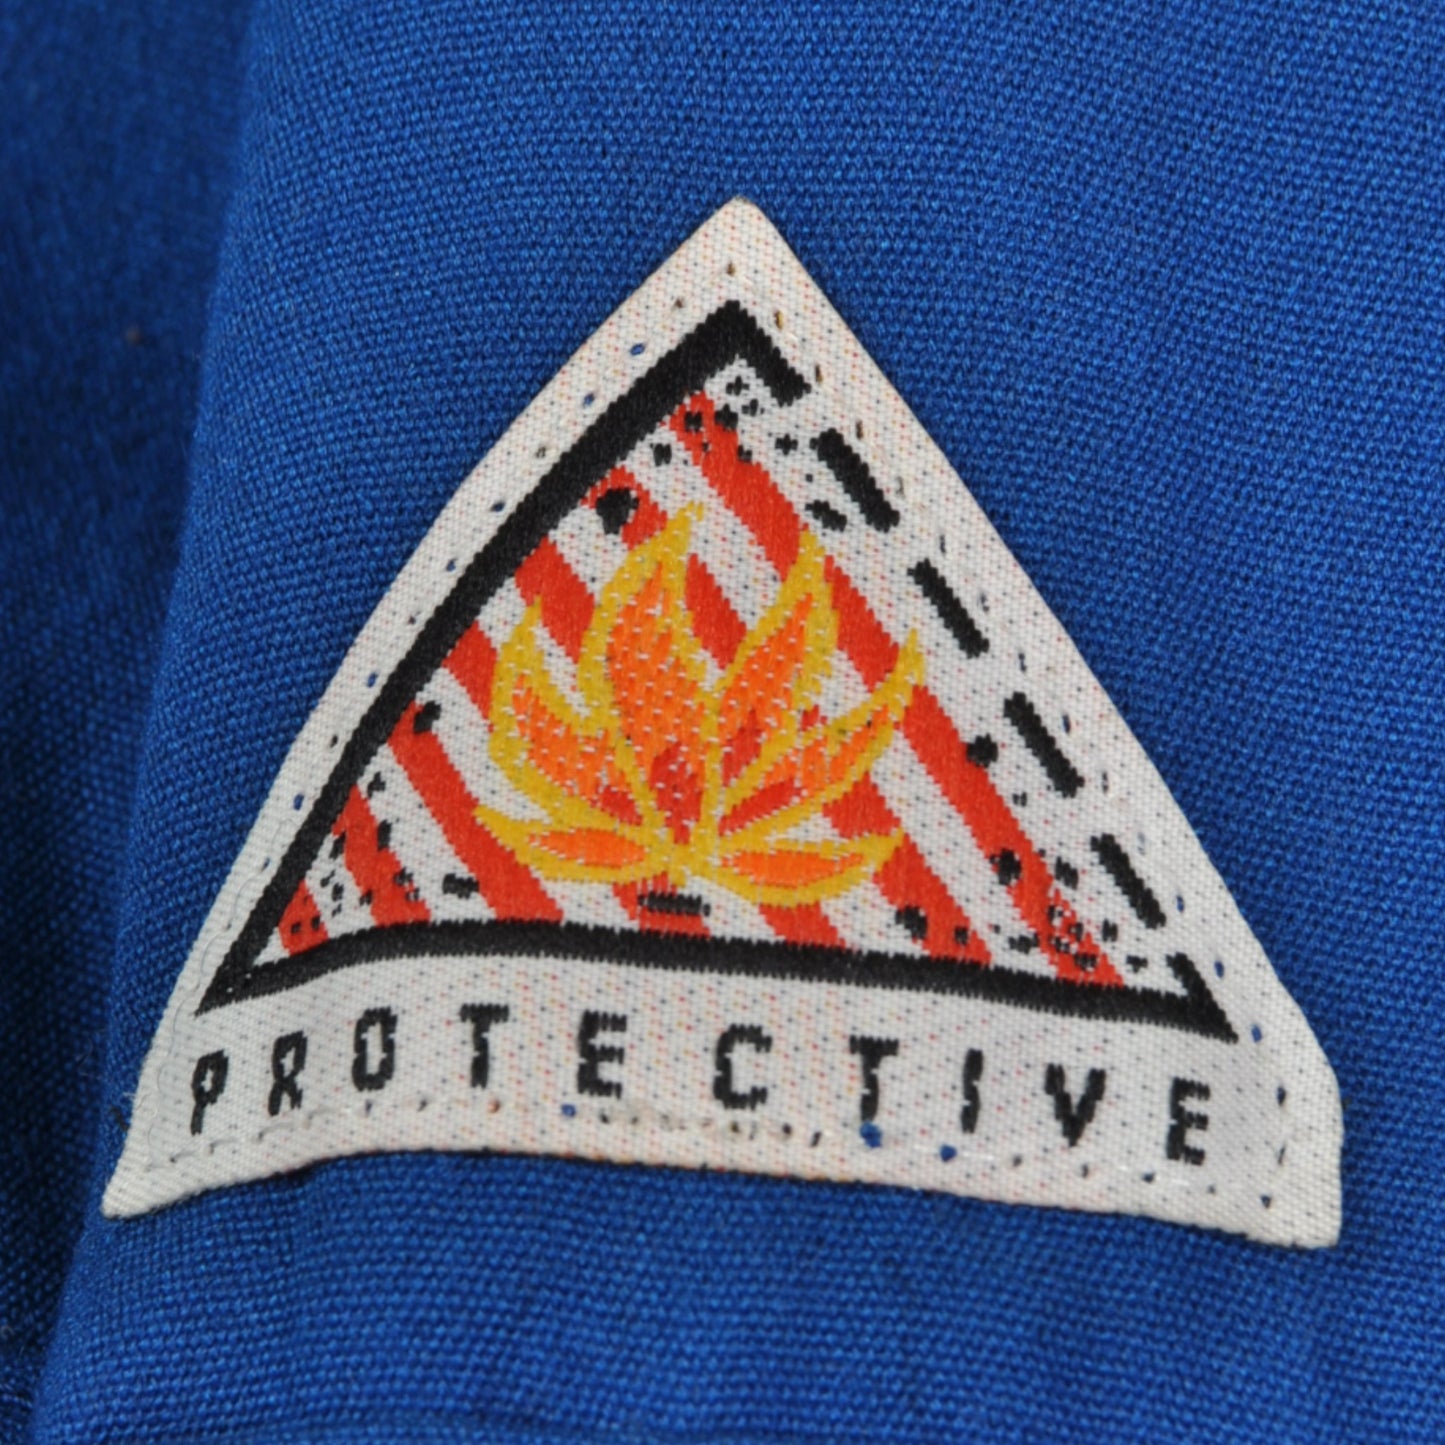 Vintage Workwear Fire Resistant Jacket Blue Medium